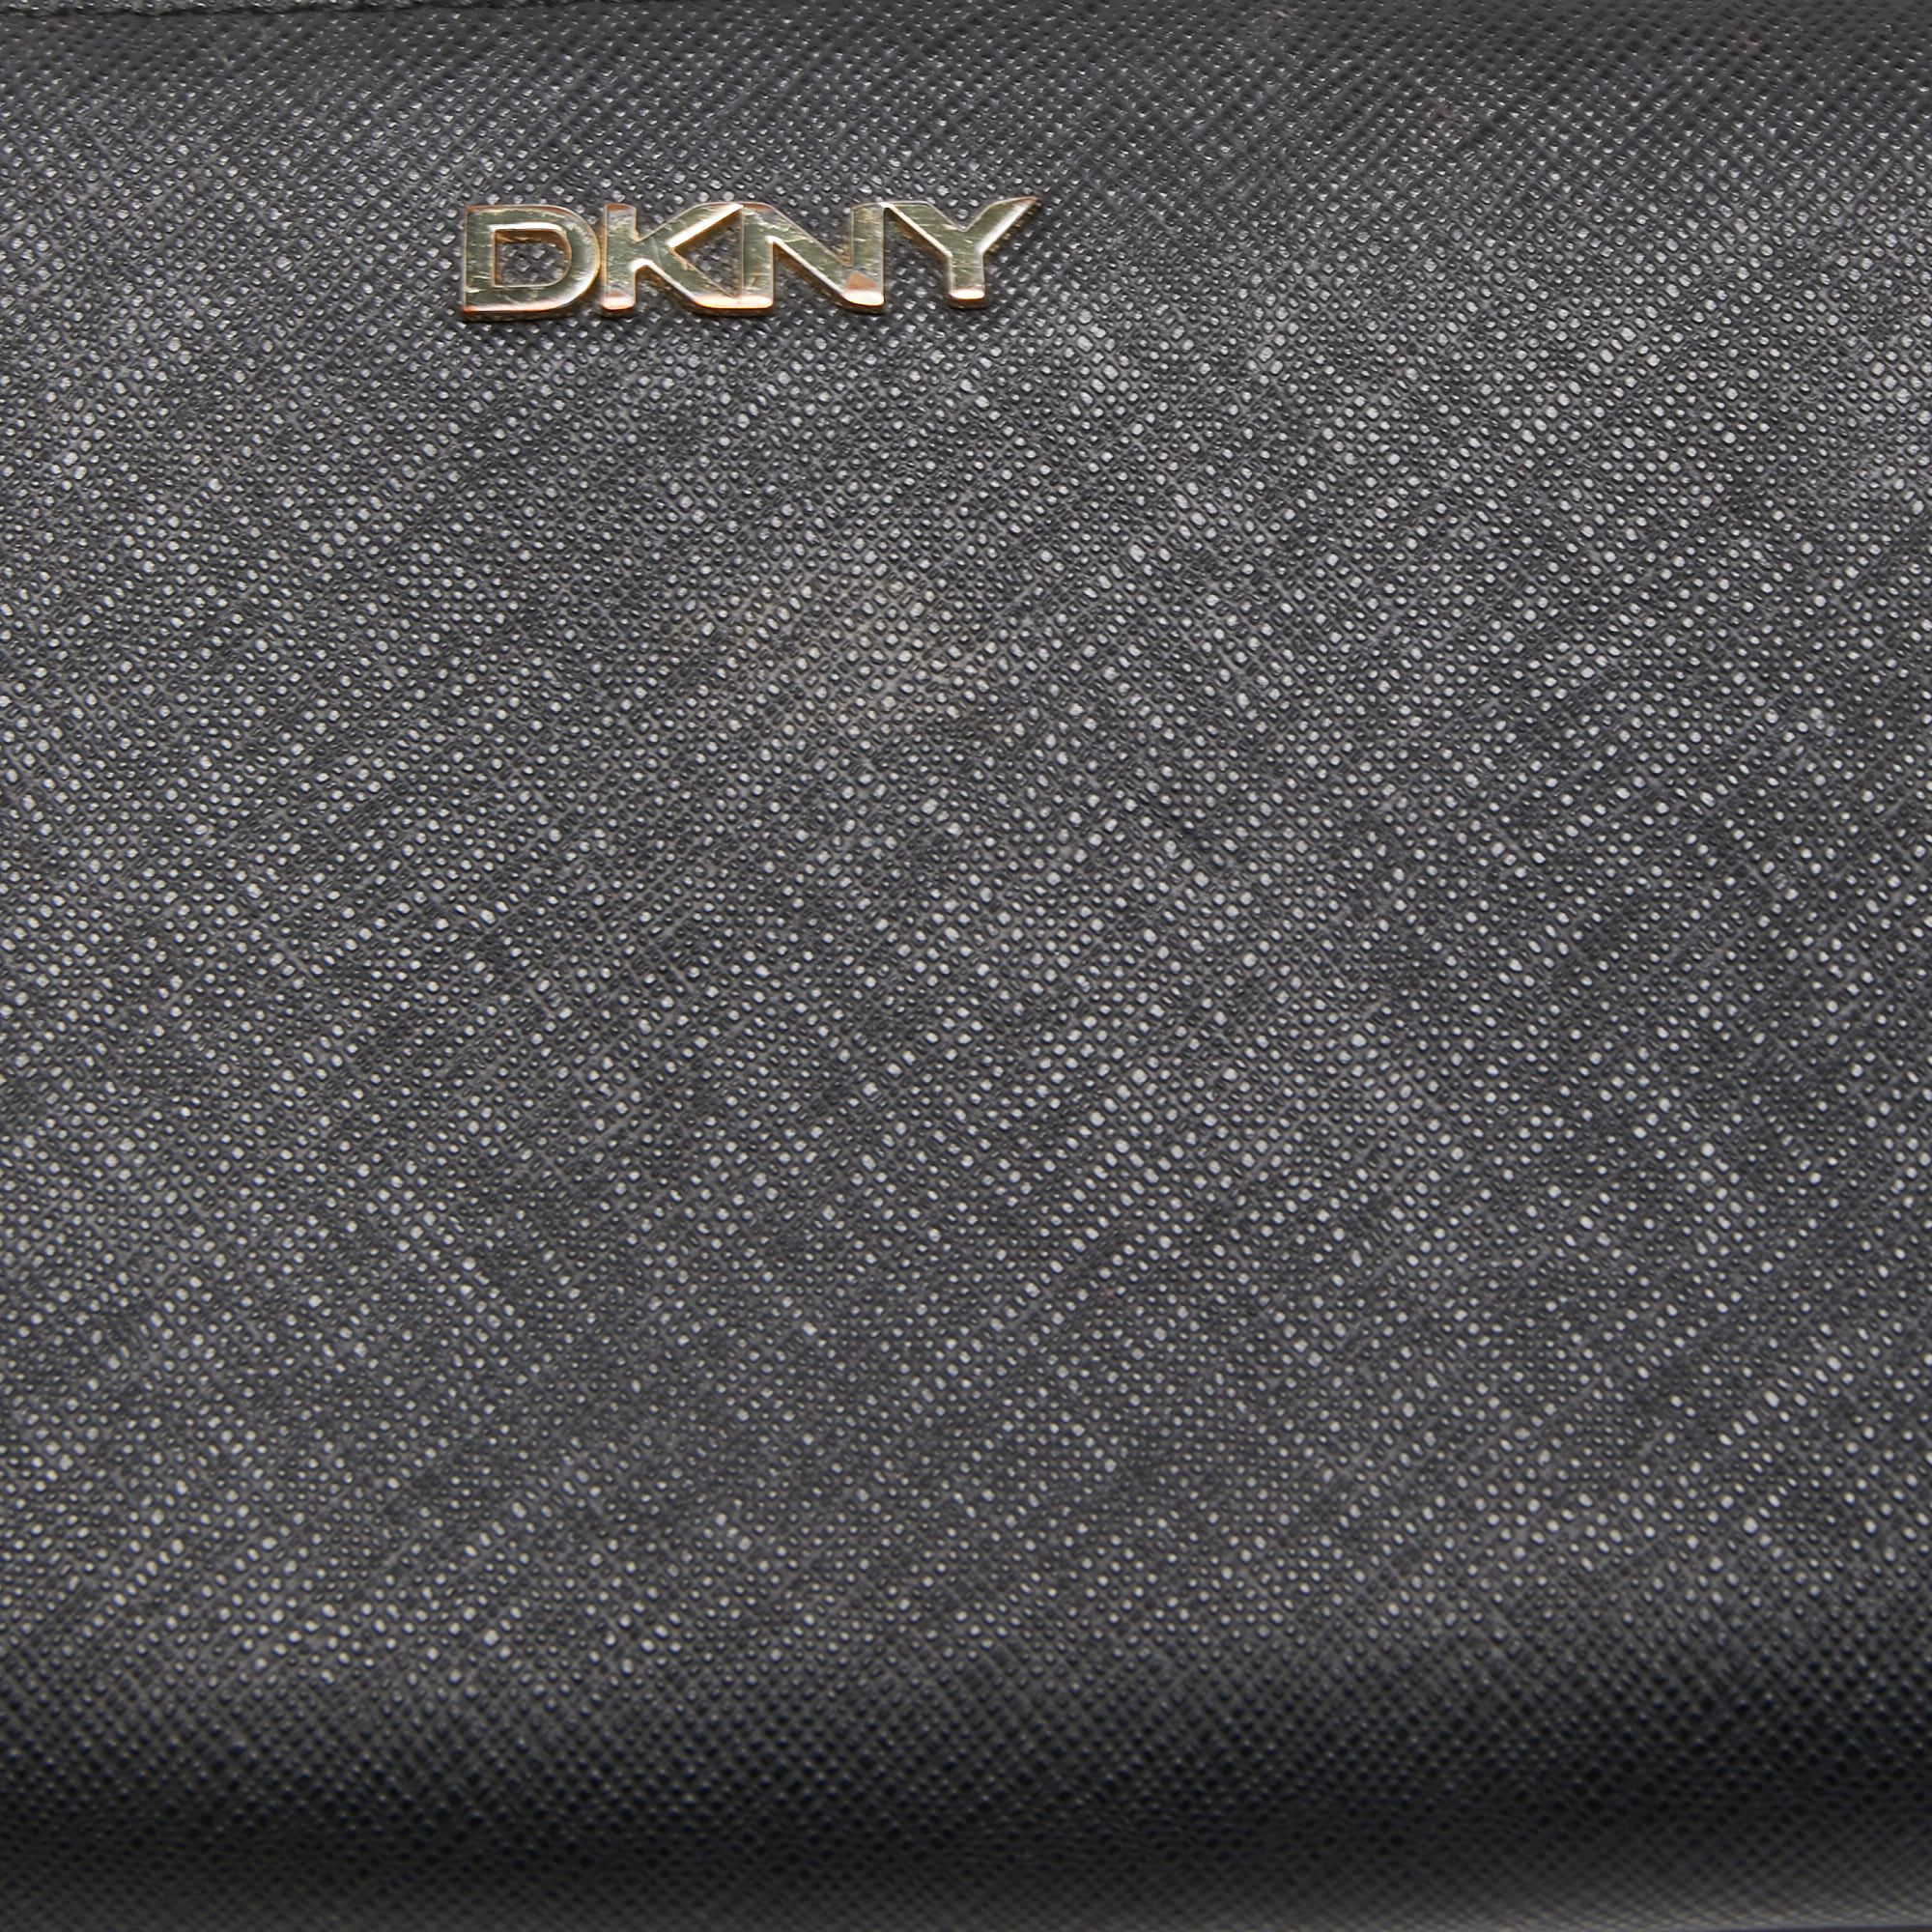 DKNY Black Leather Bryant Park Zip Around Wallet